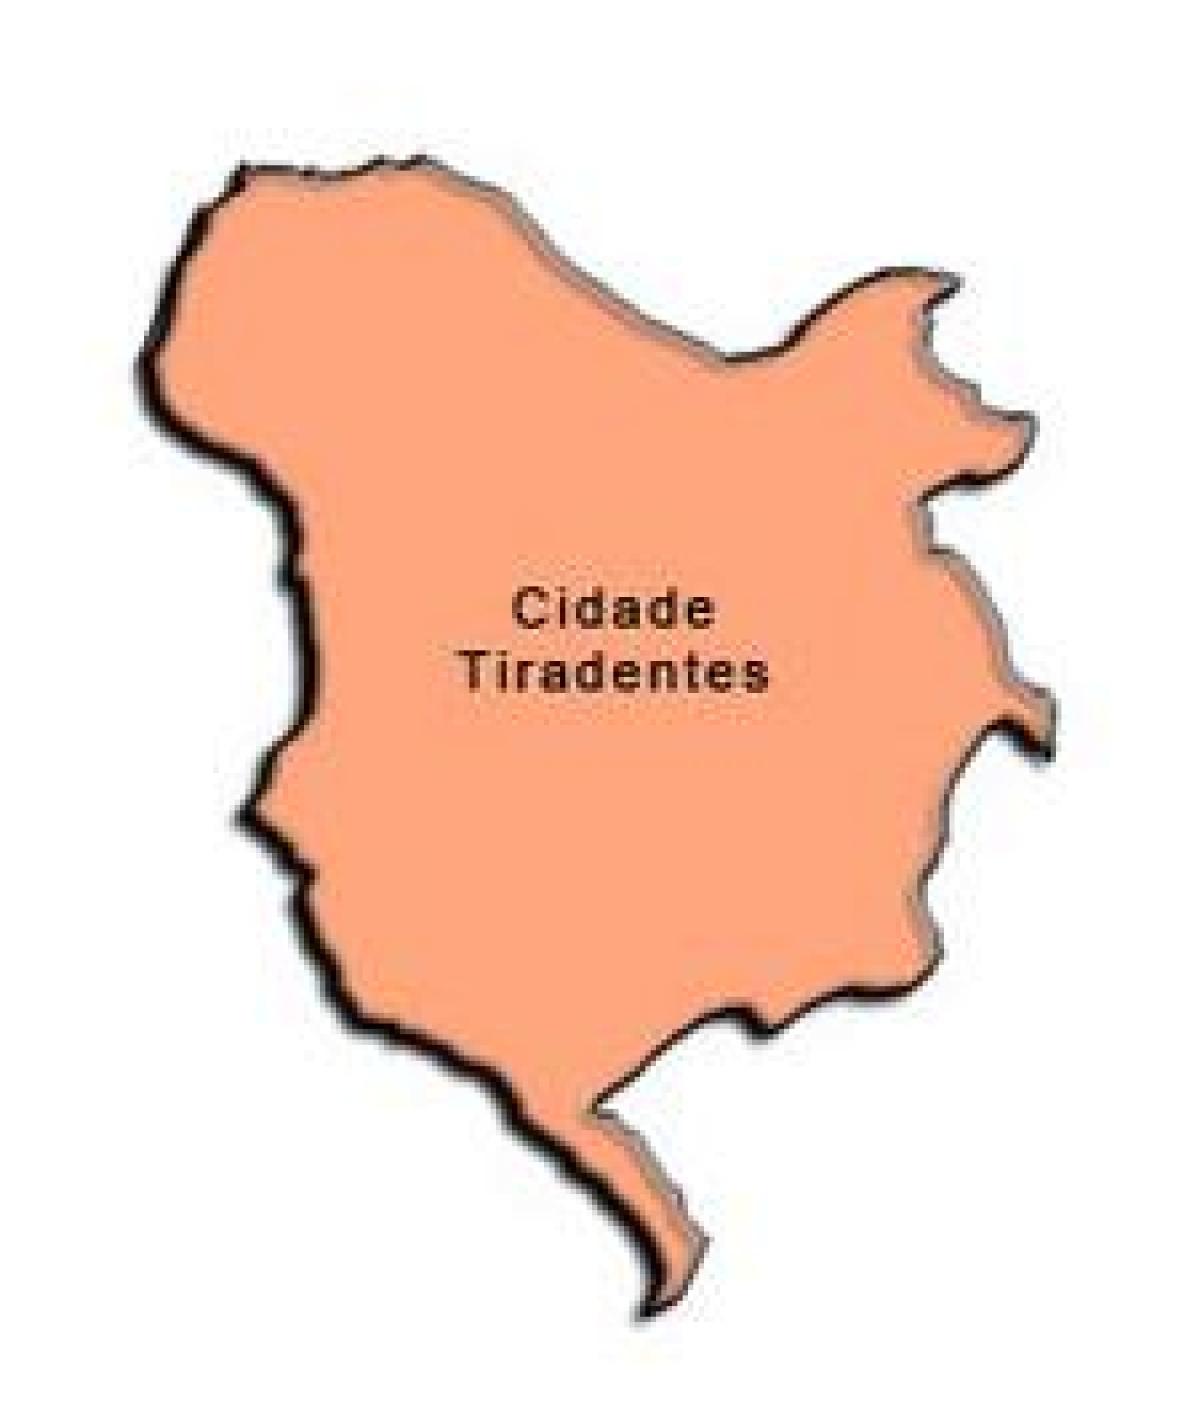 Peta Kota Tiradentes sub-prefecture